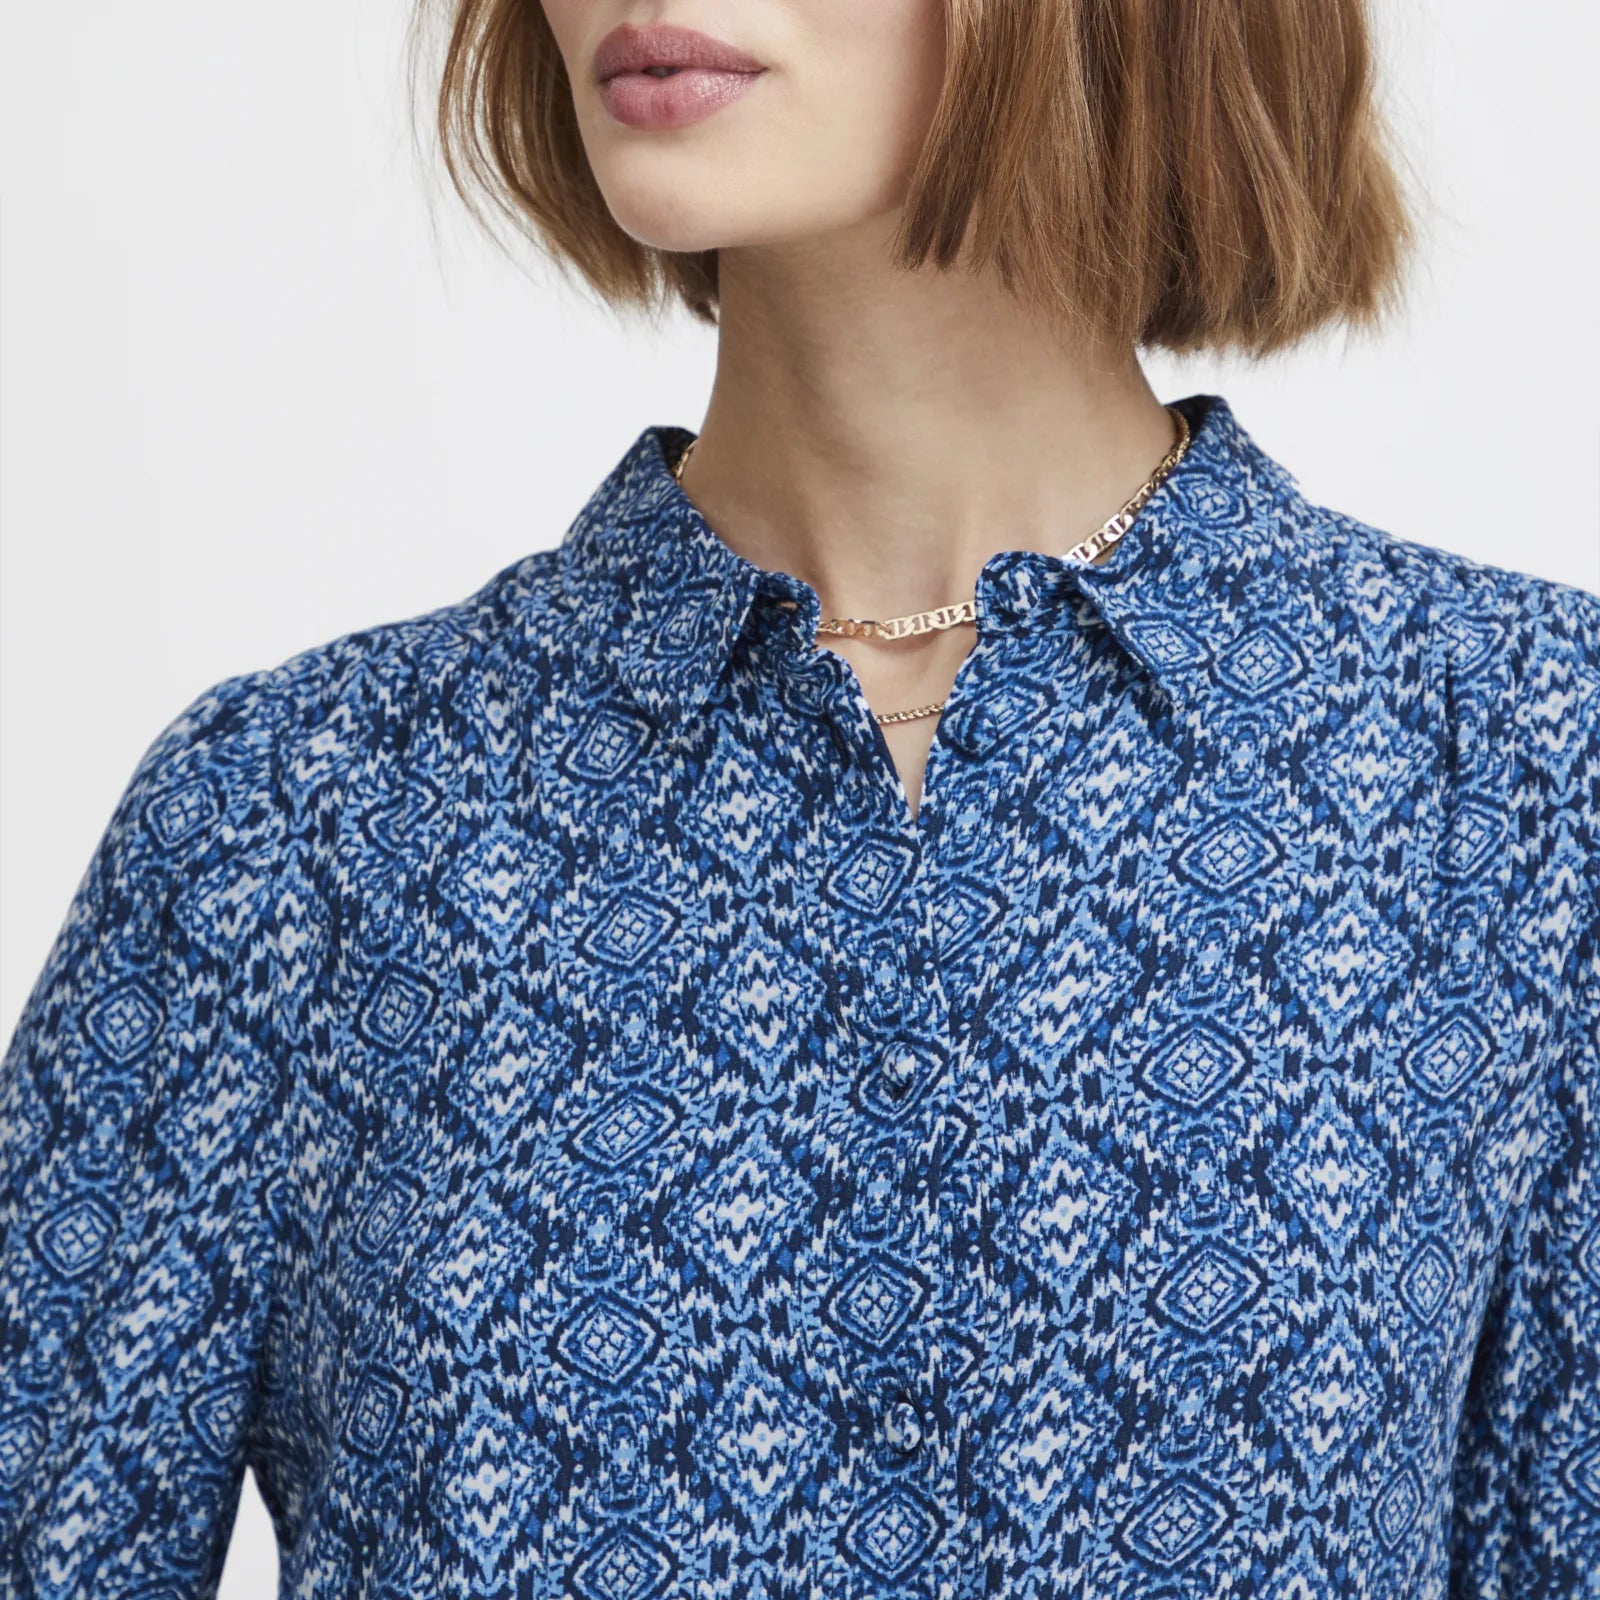 Detalje af Irnoella Skjorte fra Atelier Reve i Blue Ikat